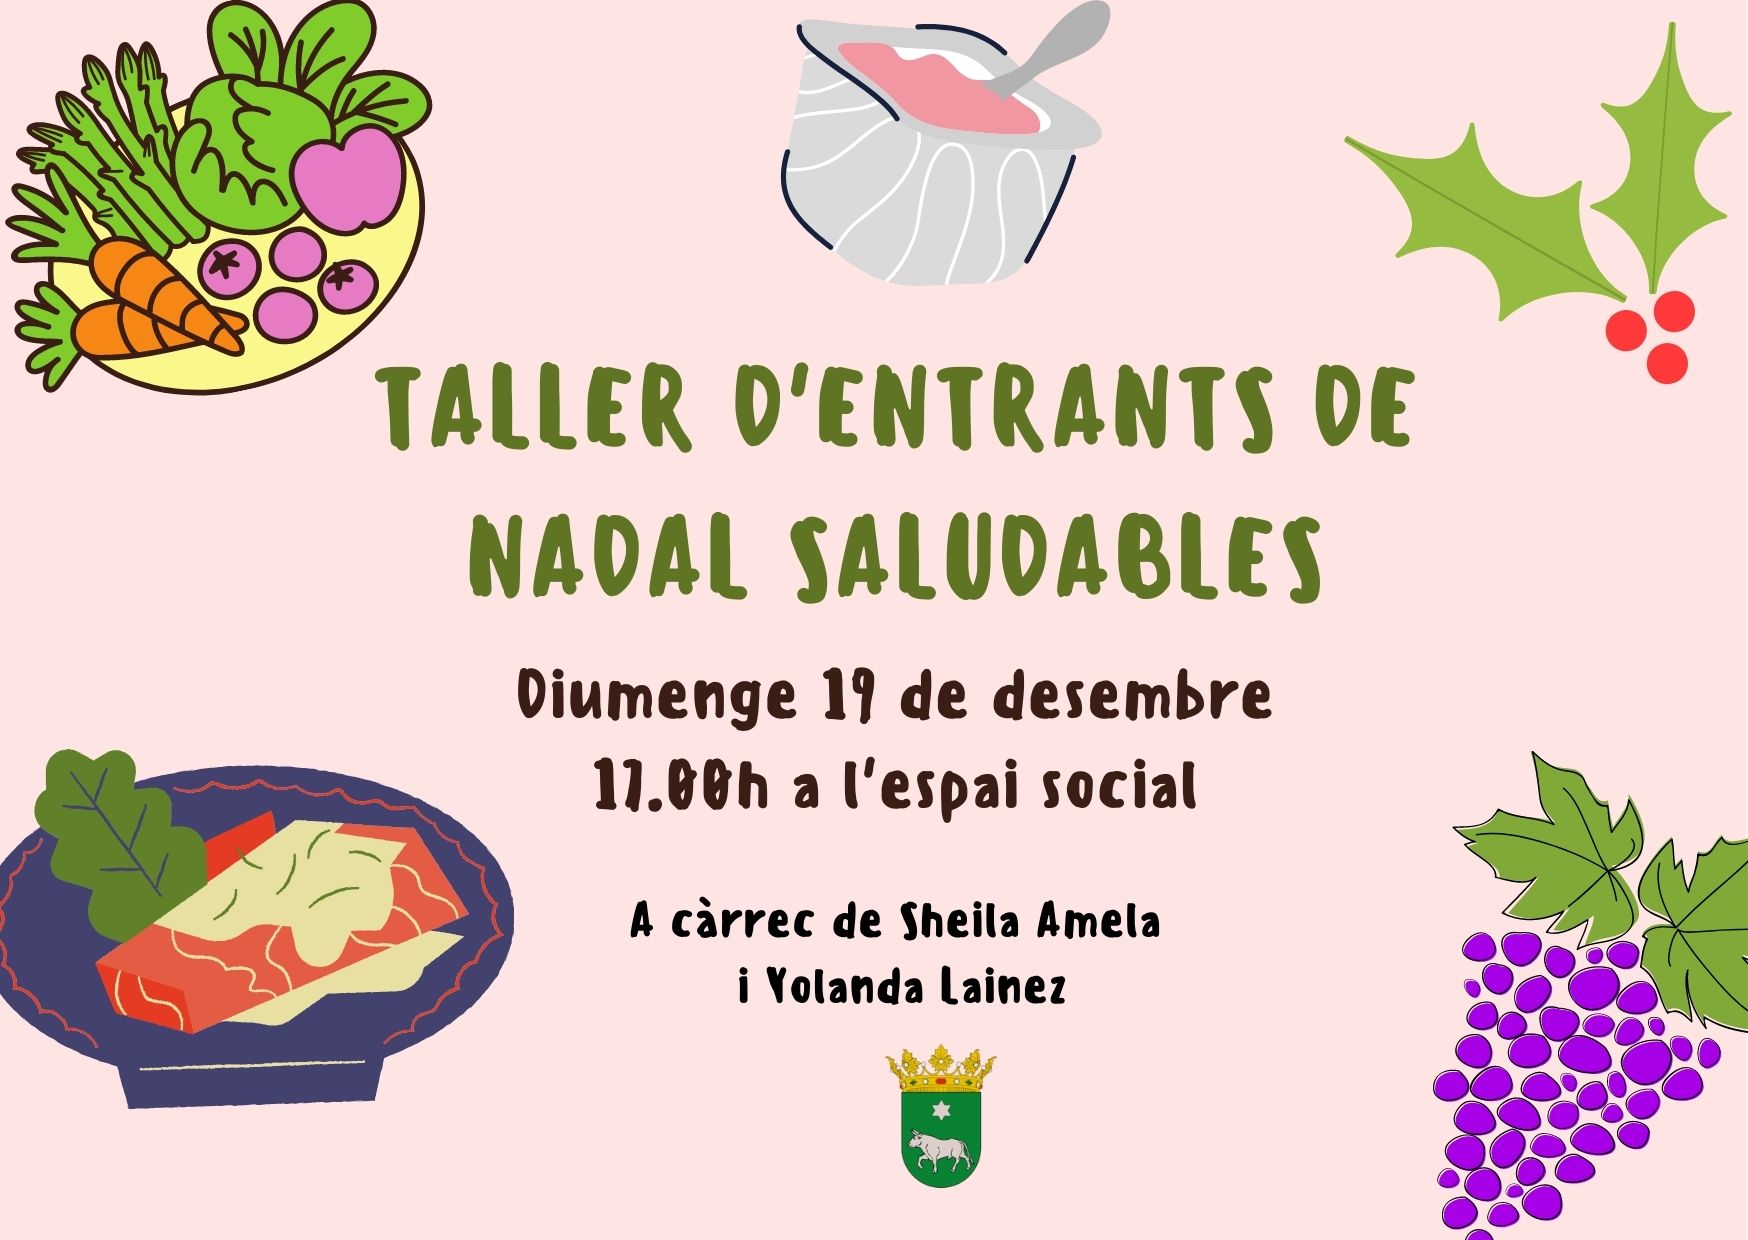 TALLER D'ENTRANTS DE NADAL